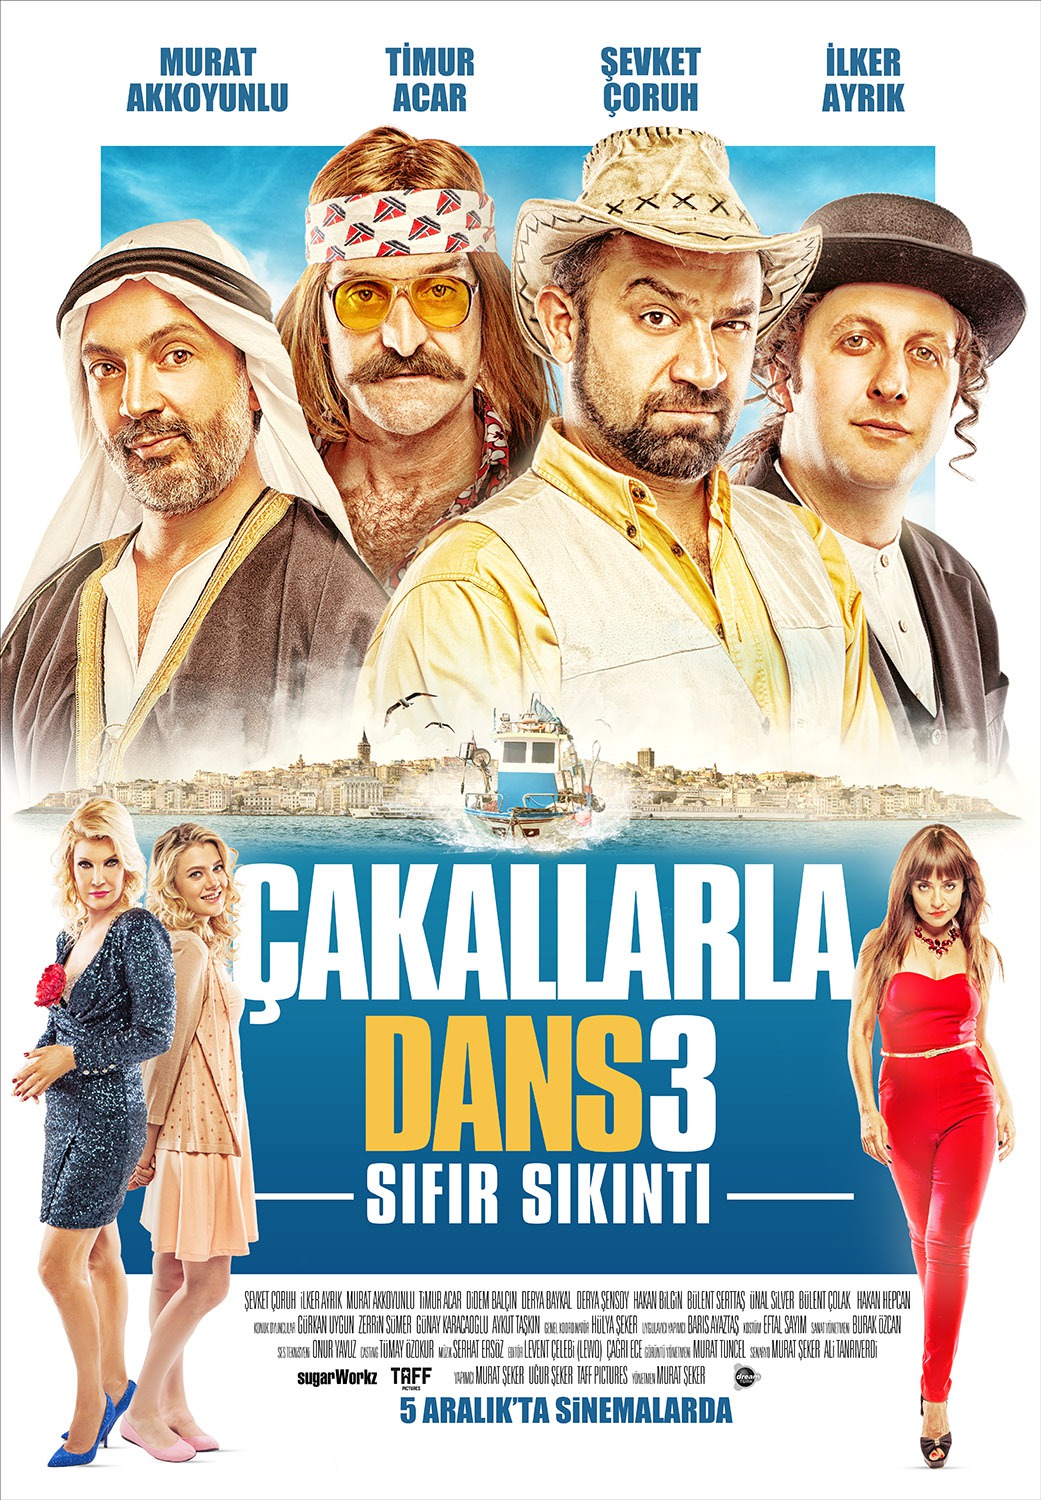 Extra Large Movie Poster Image for Çakallarla Dans 3: Sifir Sikinti (#7 of 9)